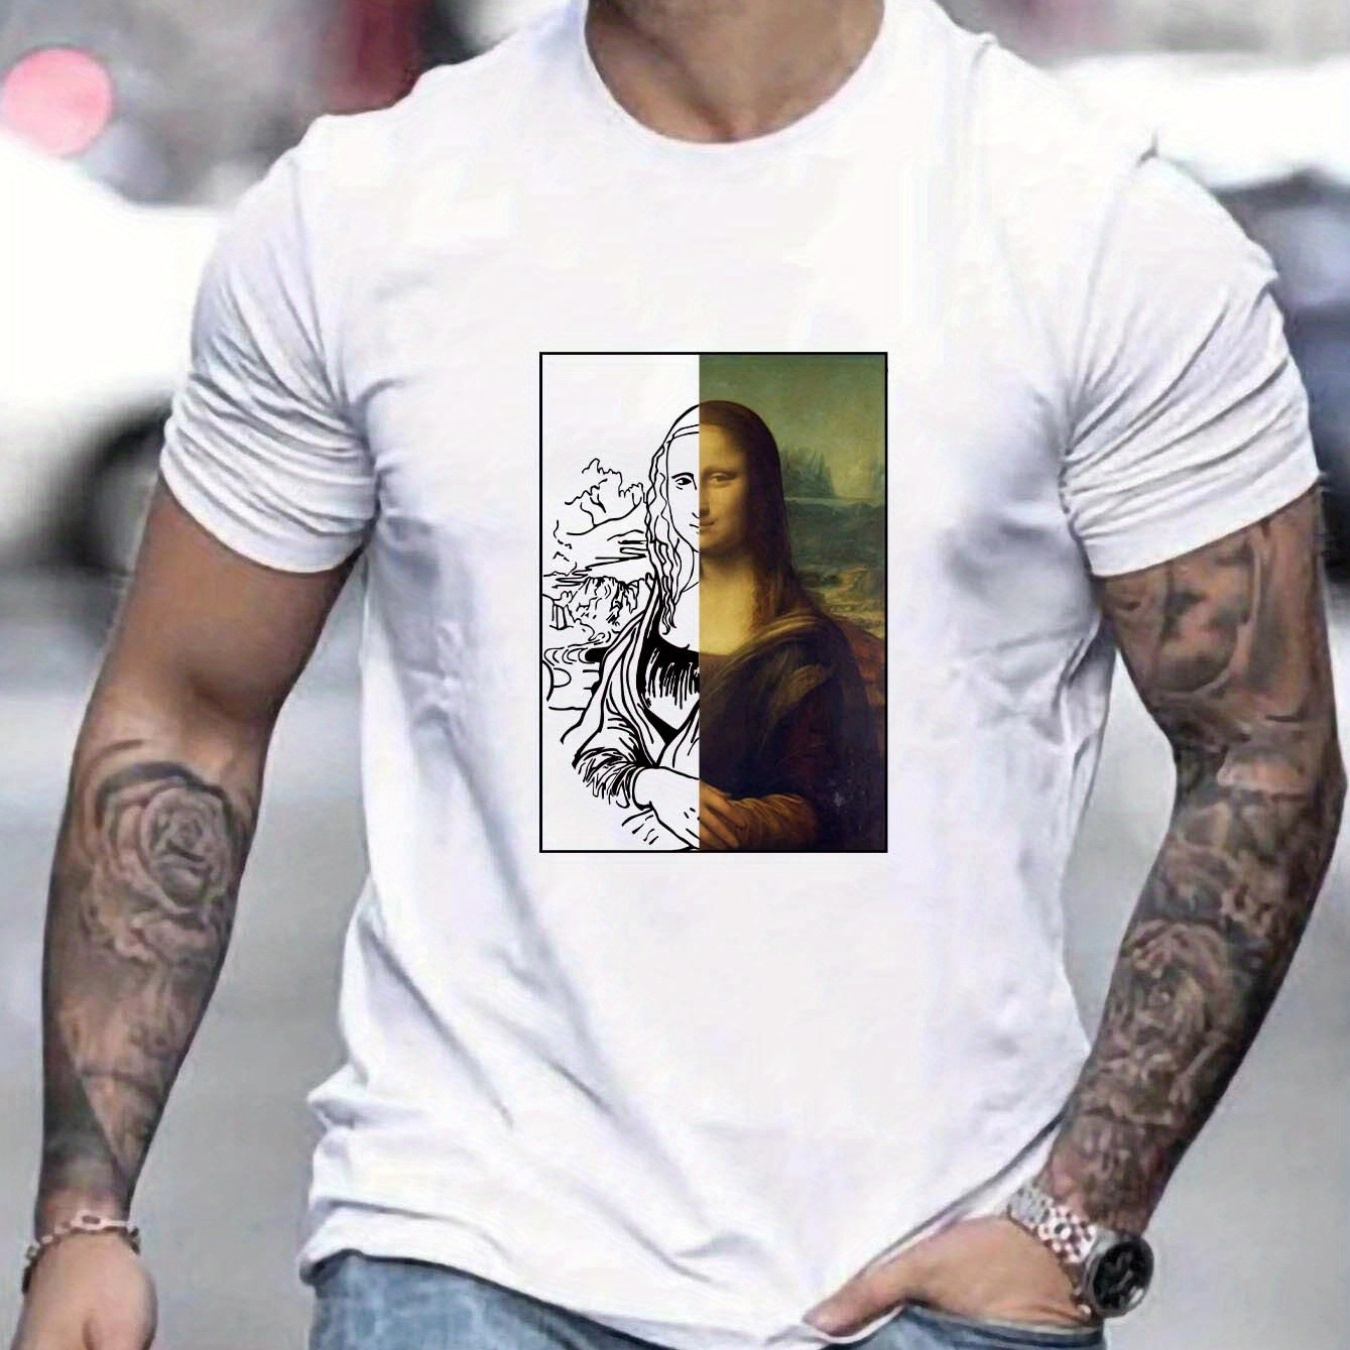 

Mona Lisa Pattern Print Men's Comfy T-shirt, Graphic Tee Men's Summer Outdoor Clothes, Men's Clothing, Tops For Men